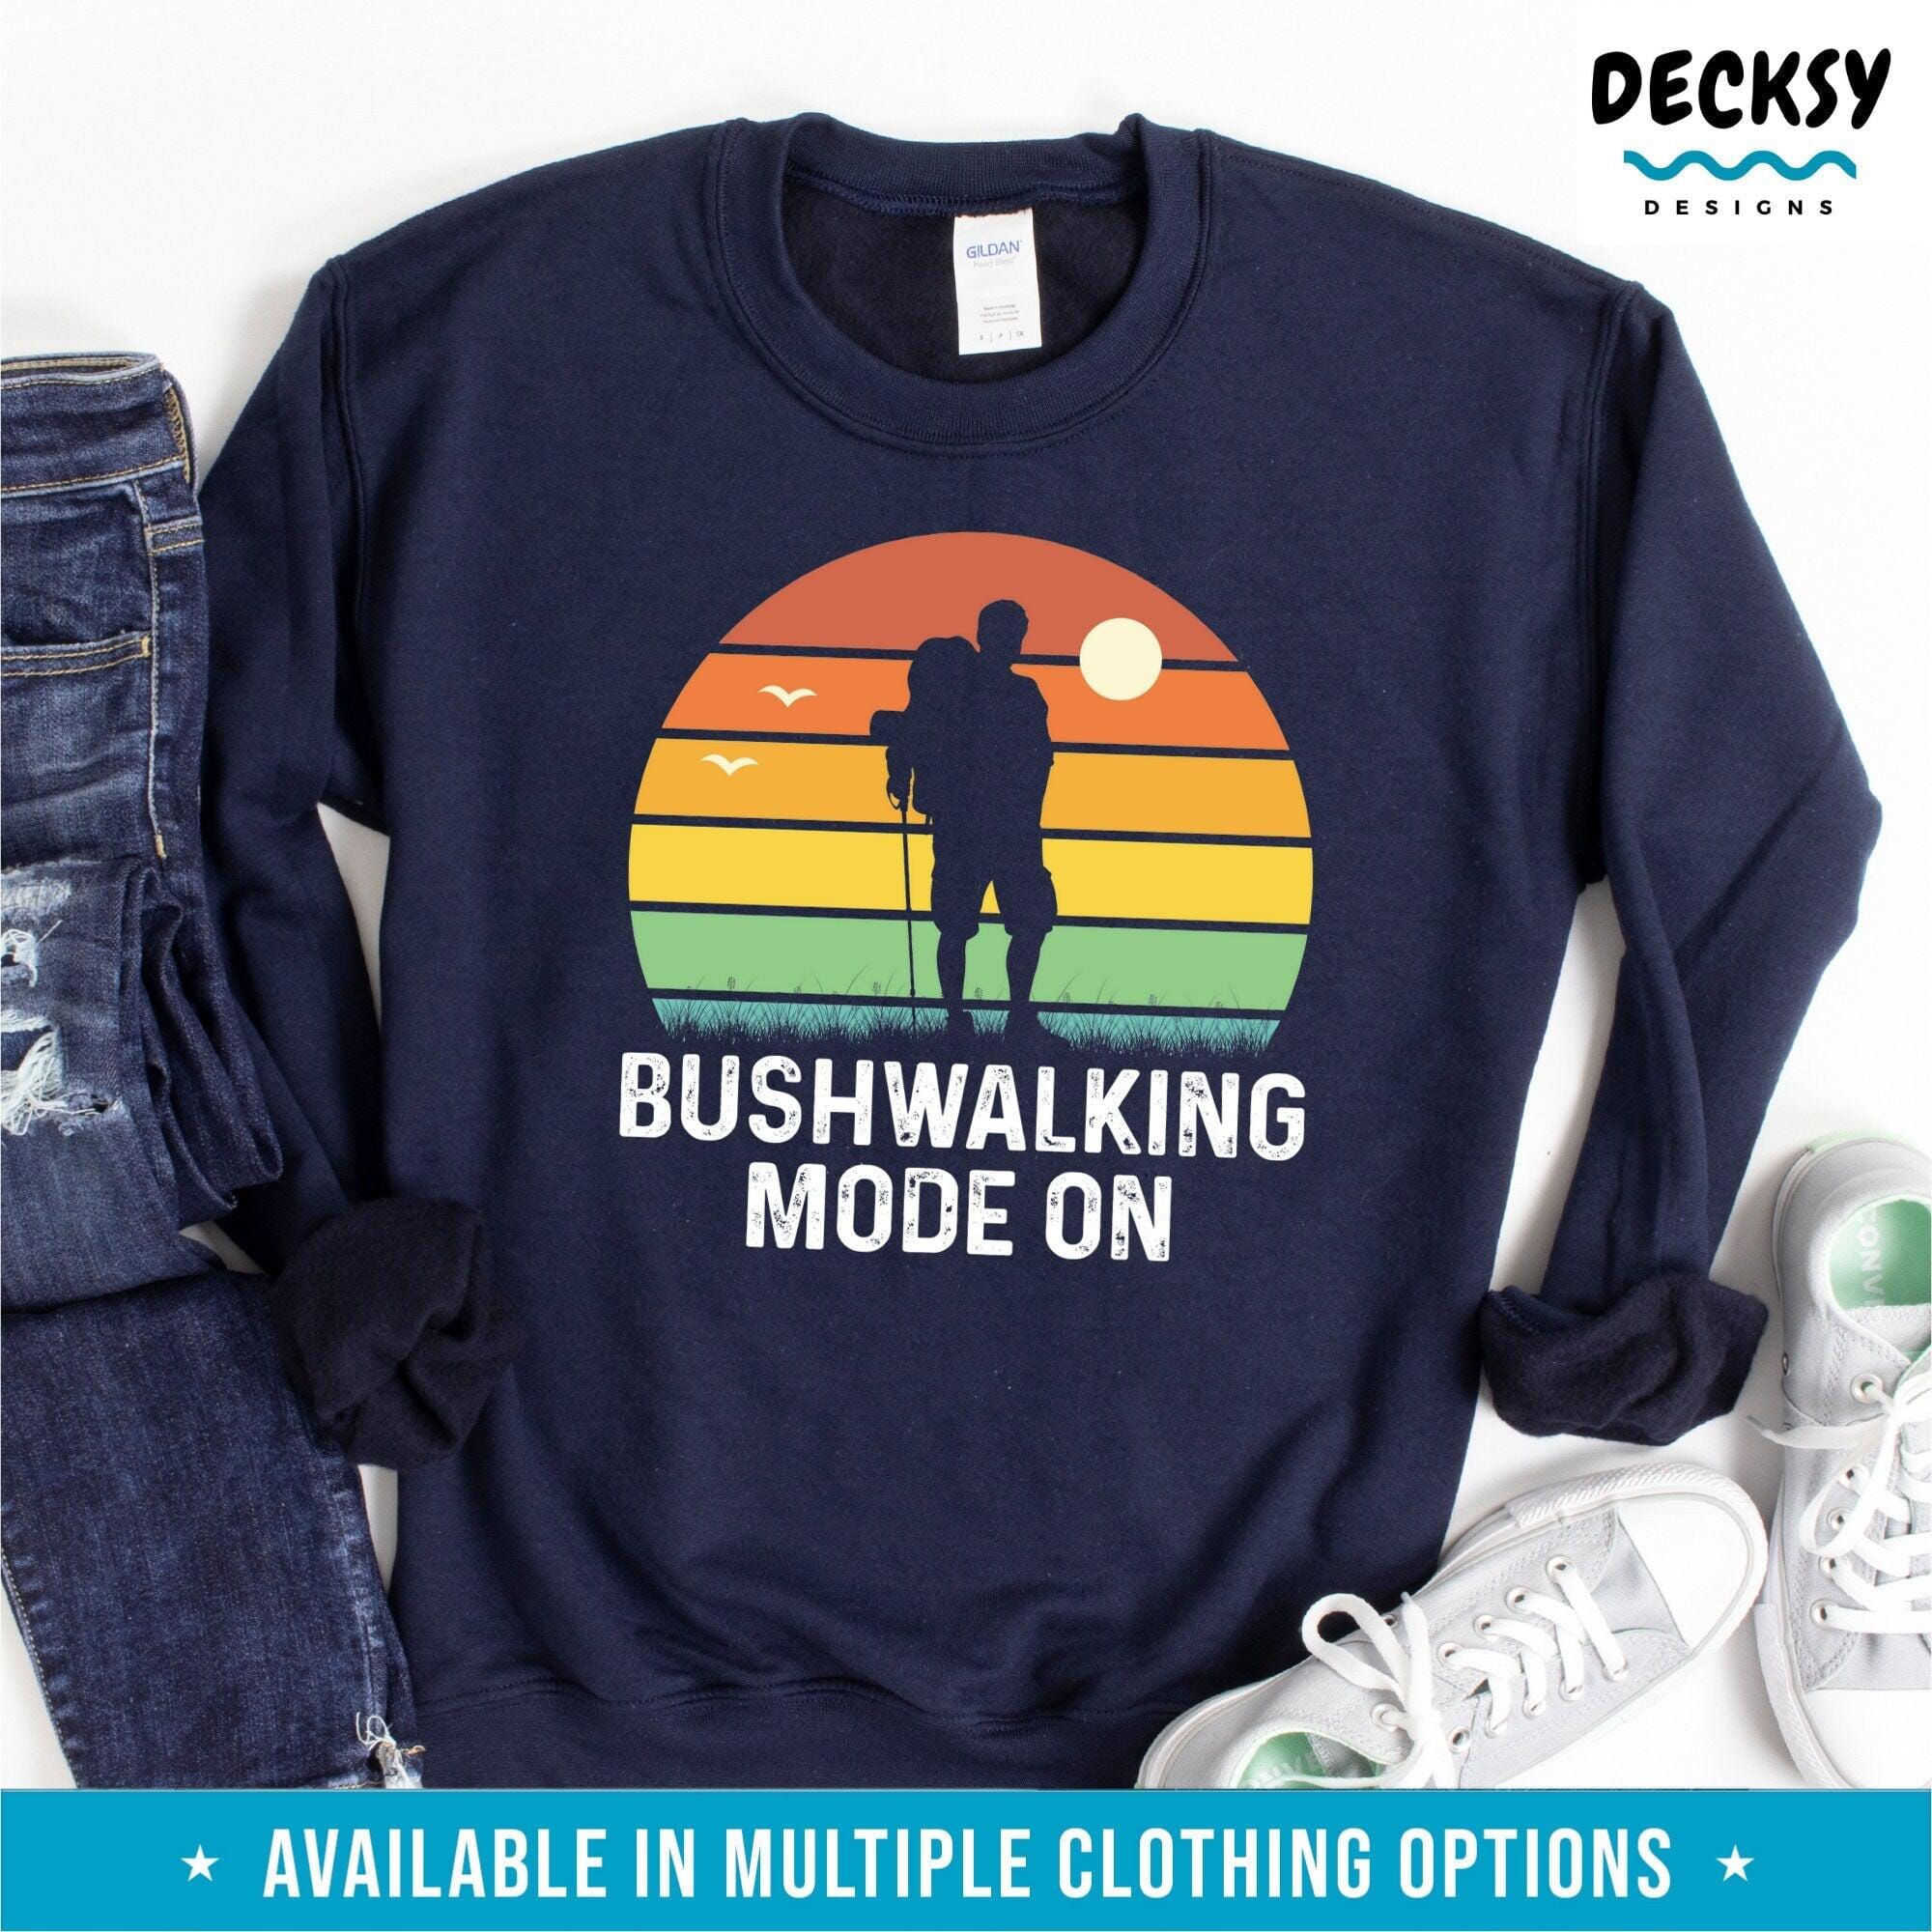 Walking T-Shirt, Hiking Gift Men-Clothing:Gender-Neutral Adult Clothing:Tops & Tees:T-shirts:Graphic Tees-DecksyDesigns